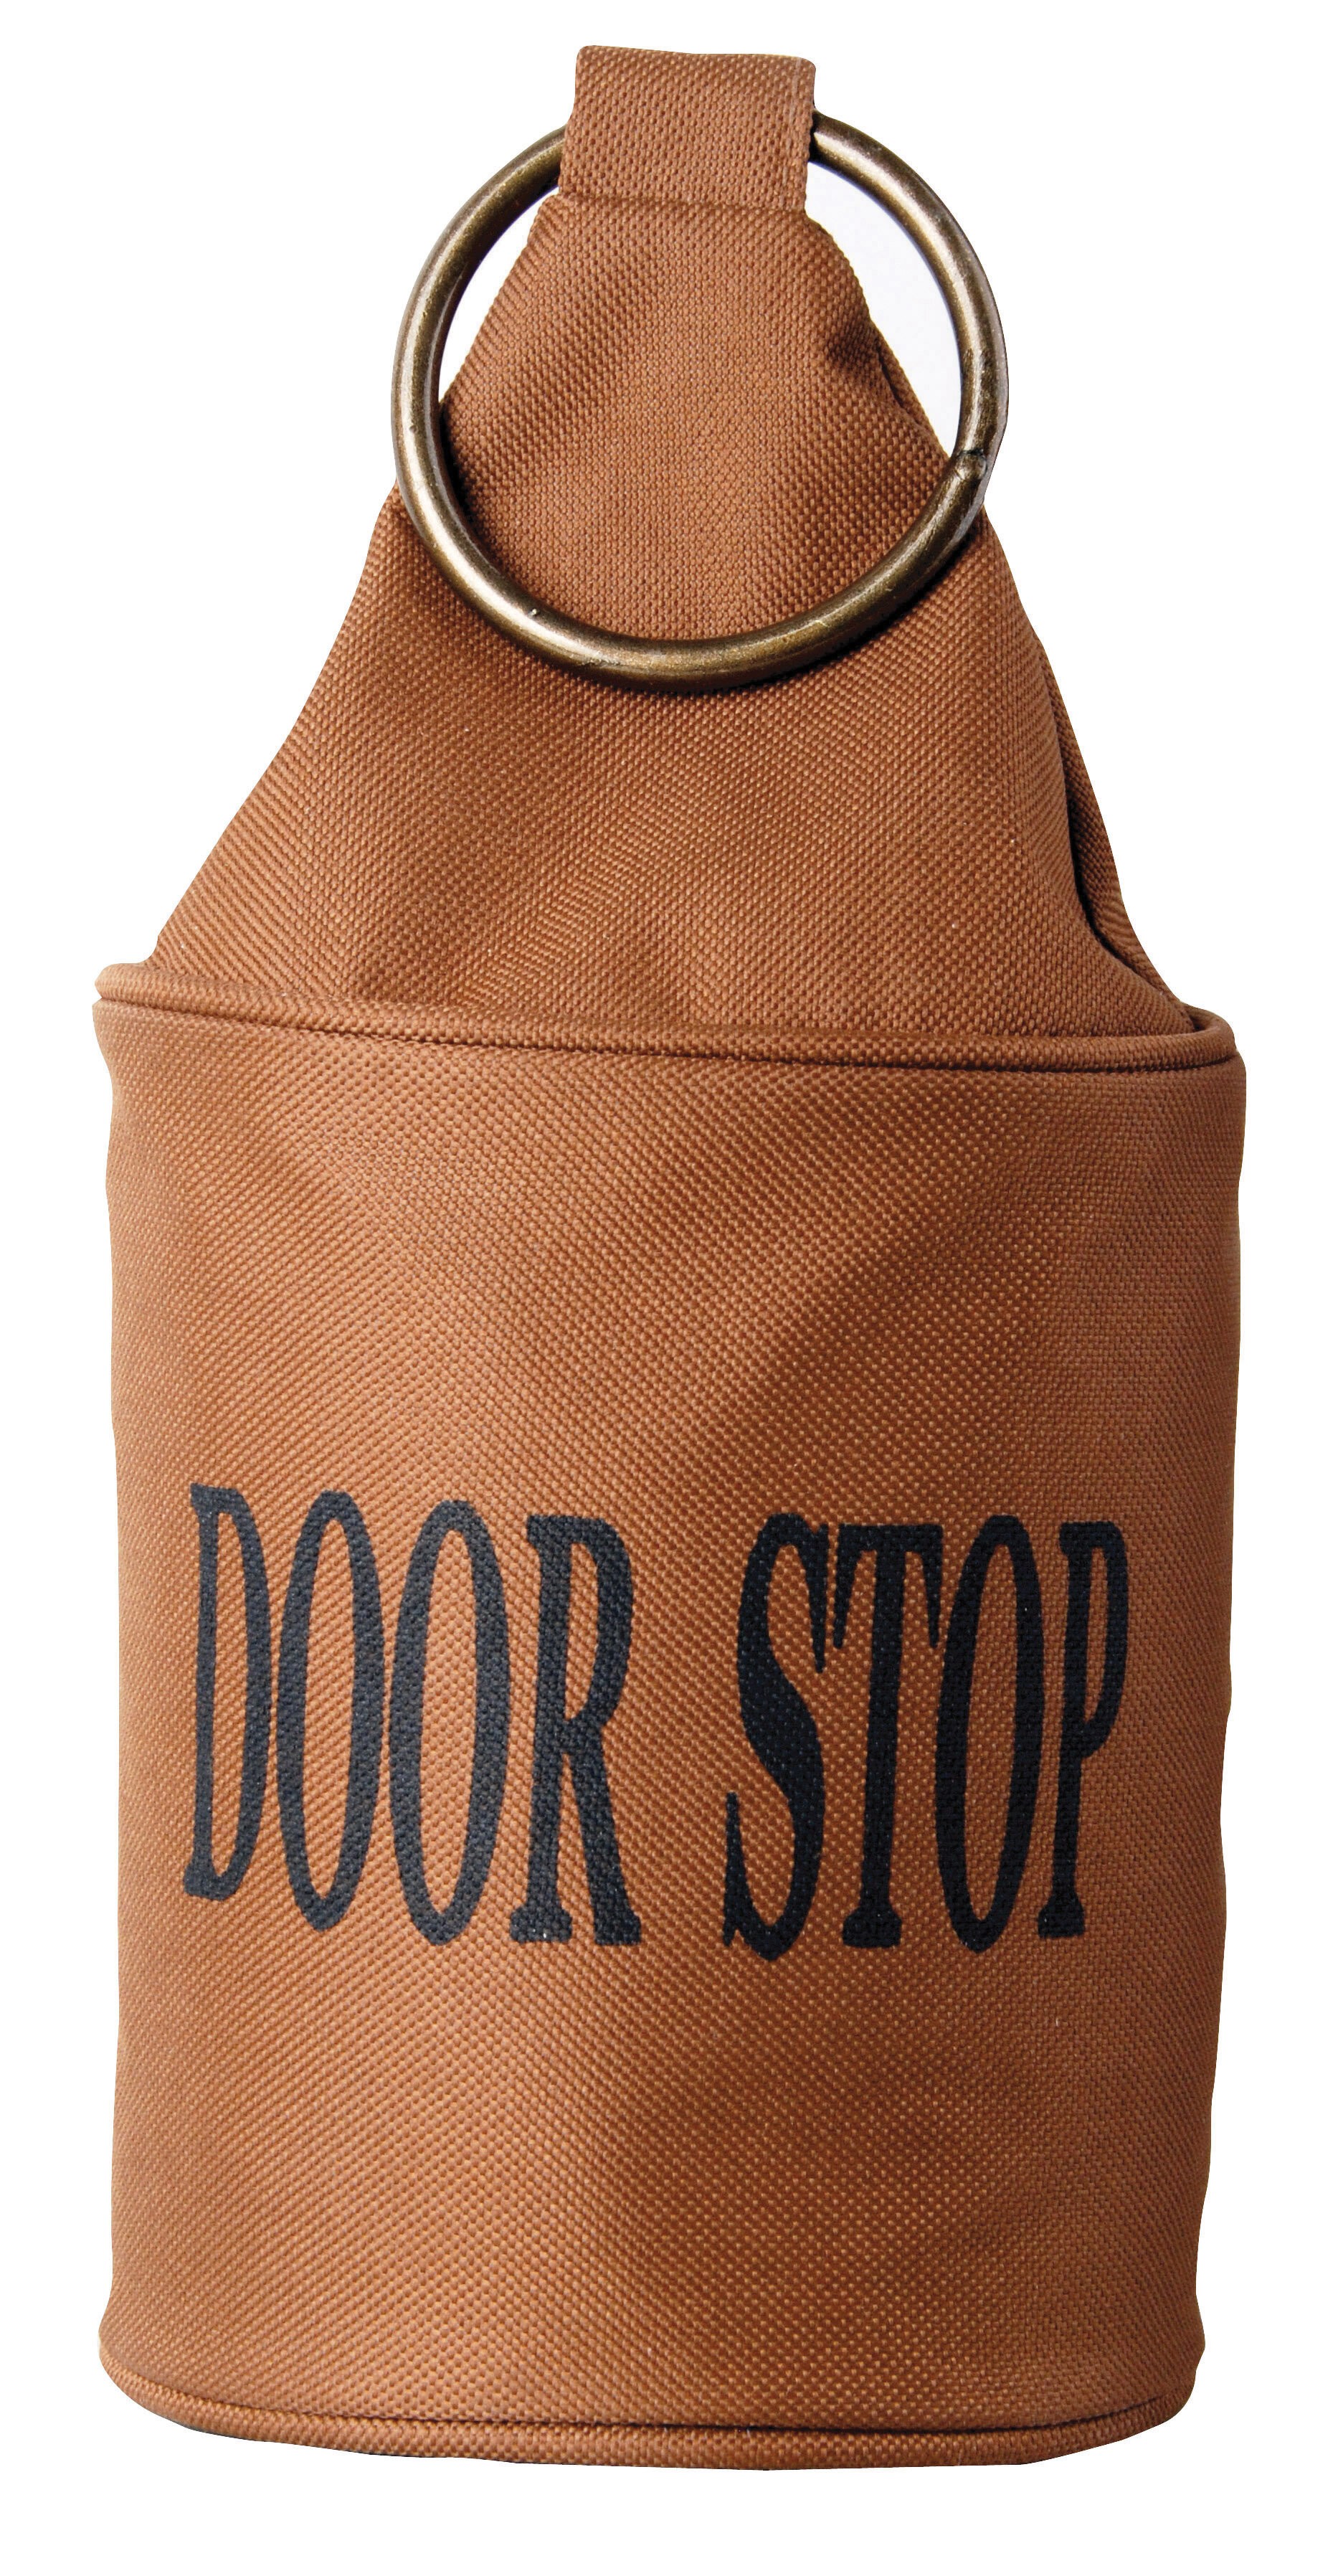 Fabric door stop with ring